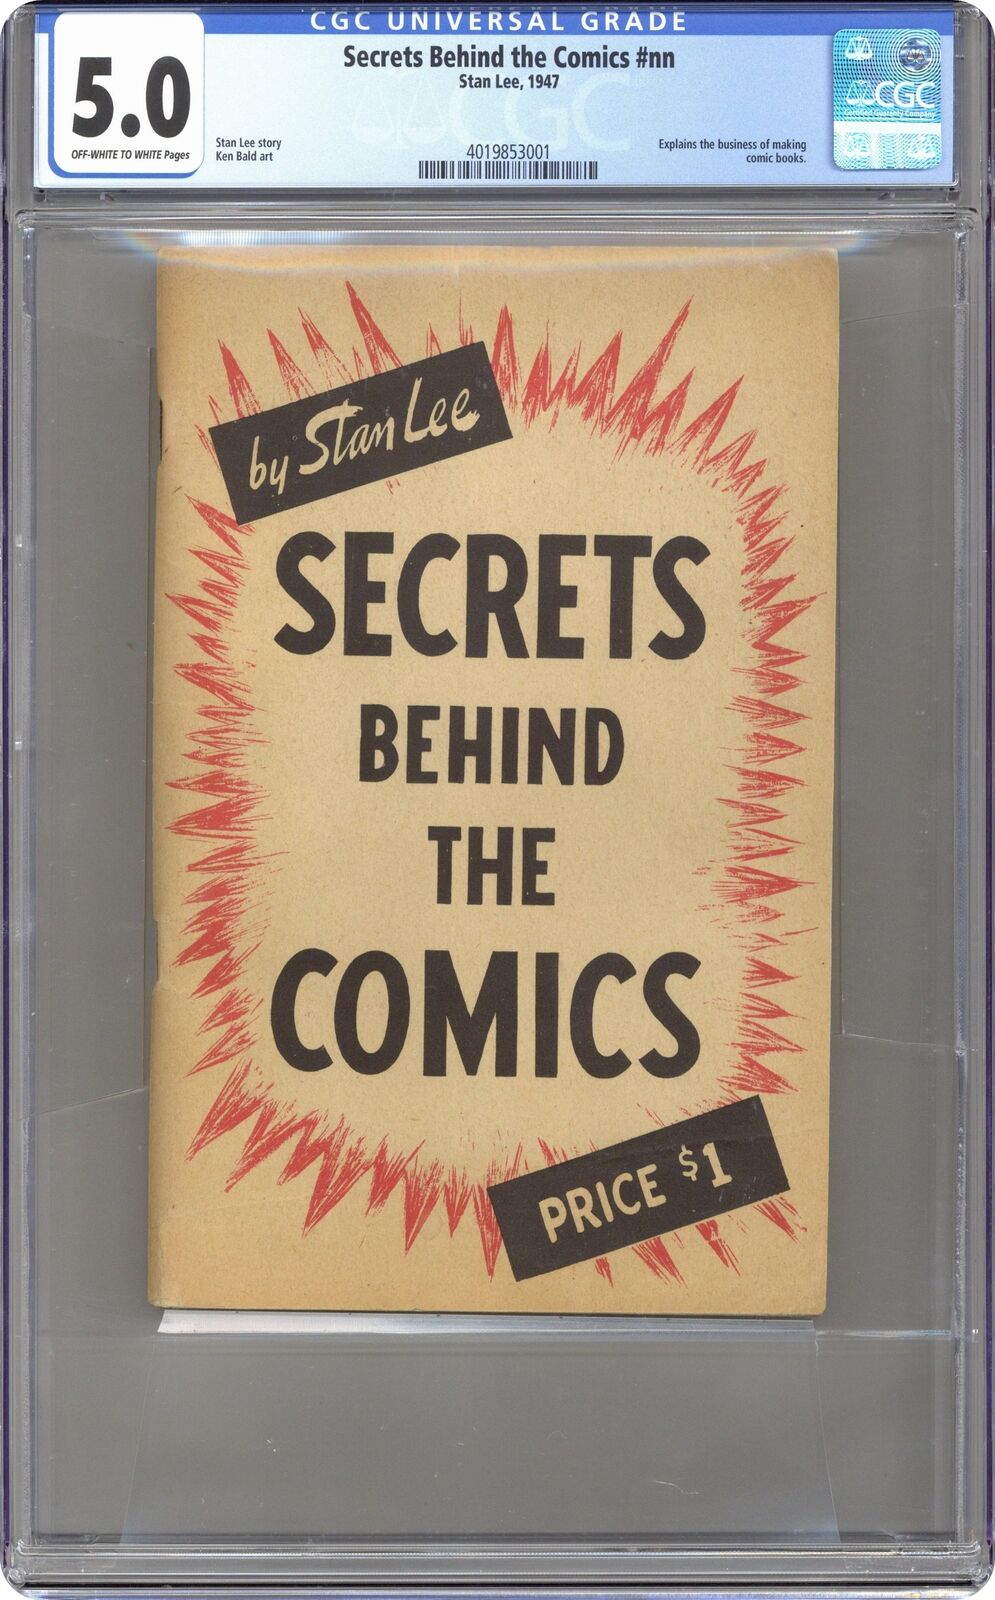 Secrets Behind the Comics by Stan Lee 1947 CGC 5.0 4019853001